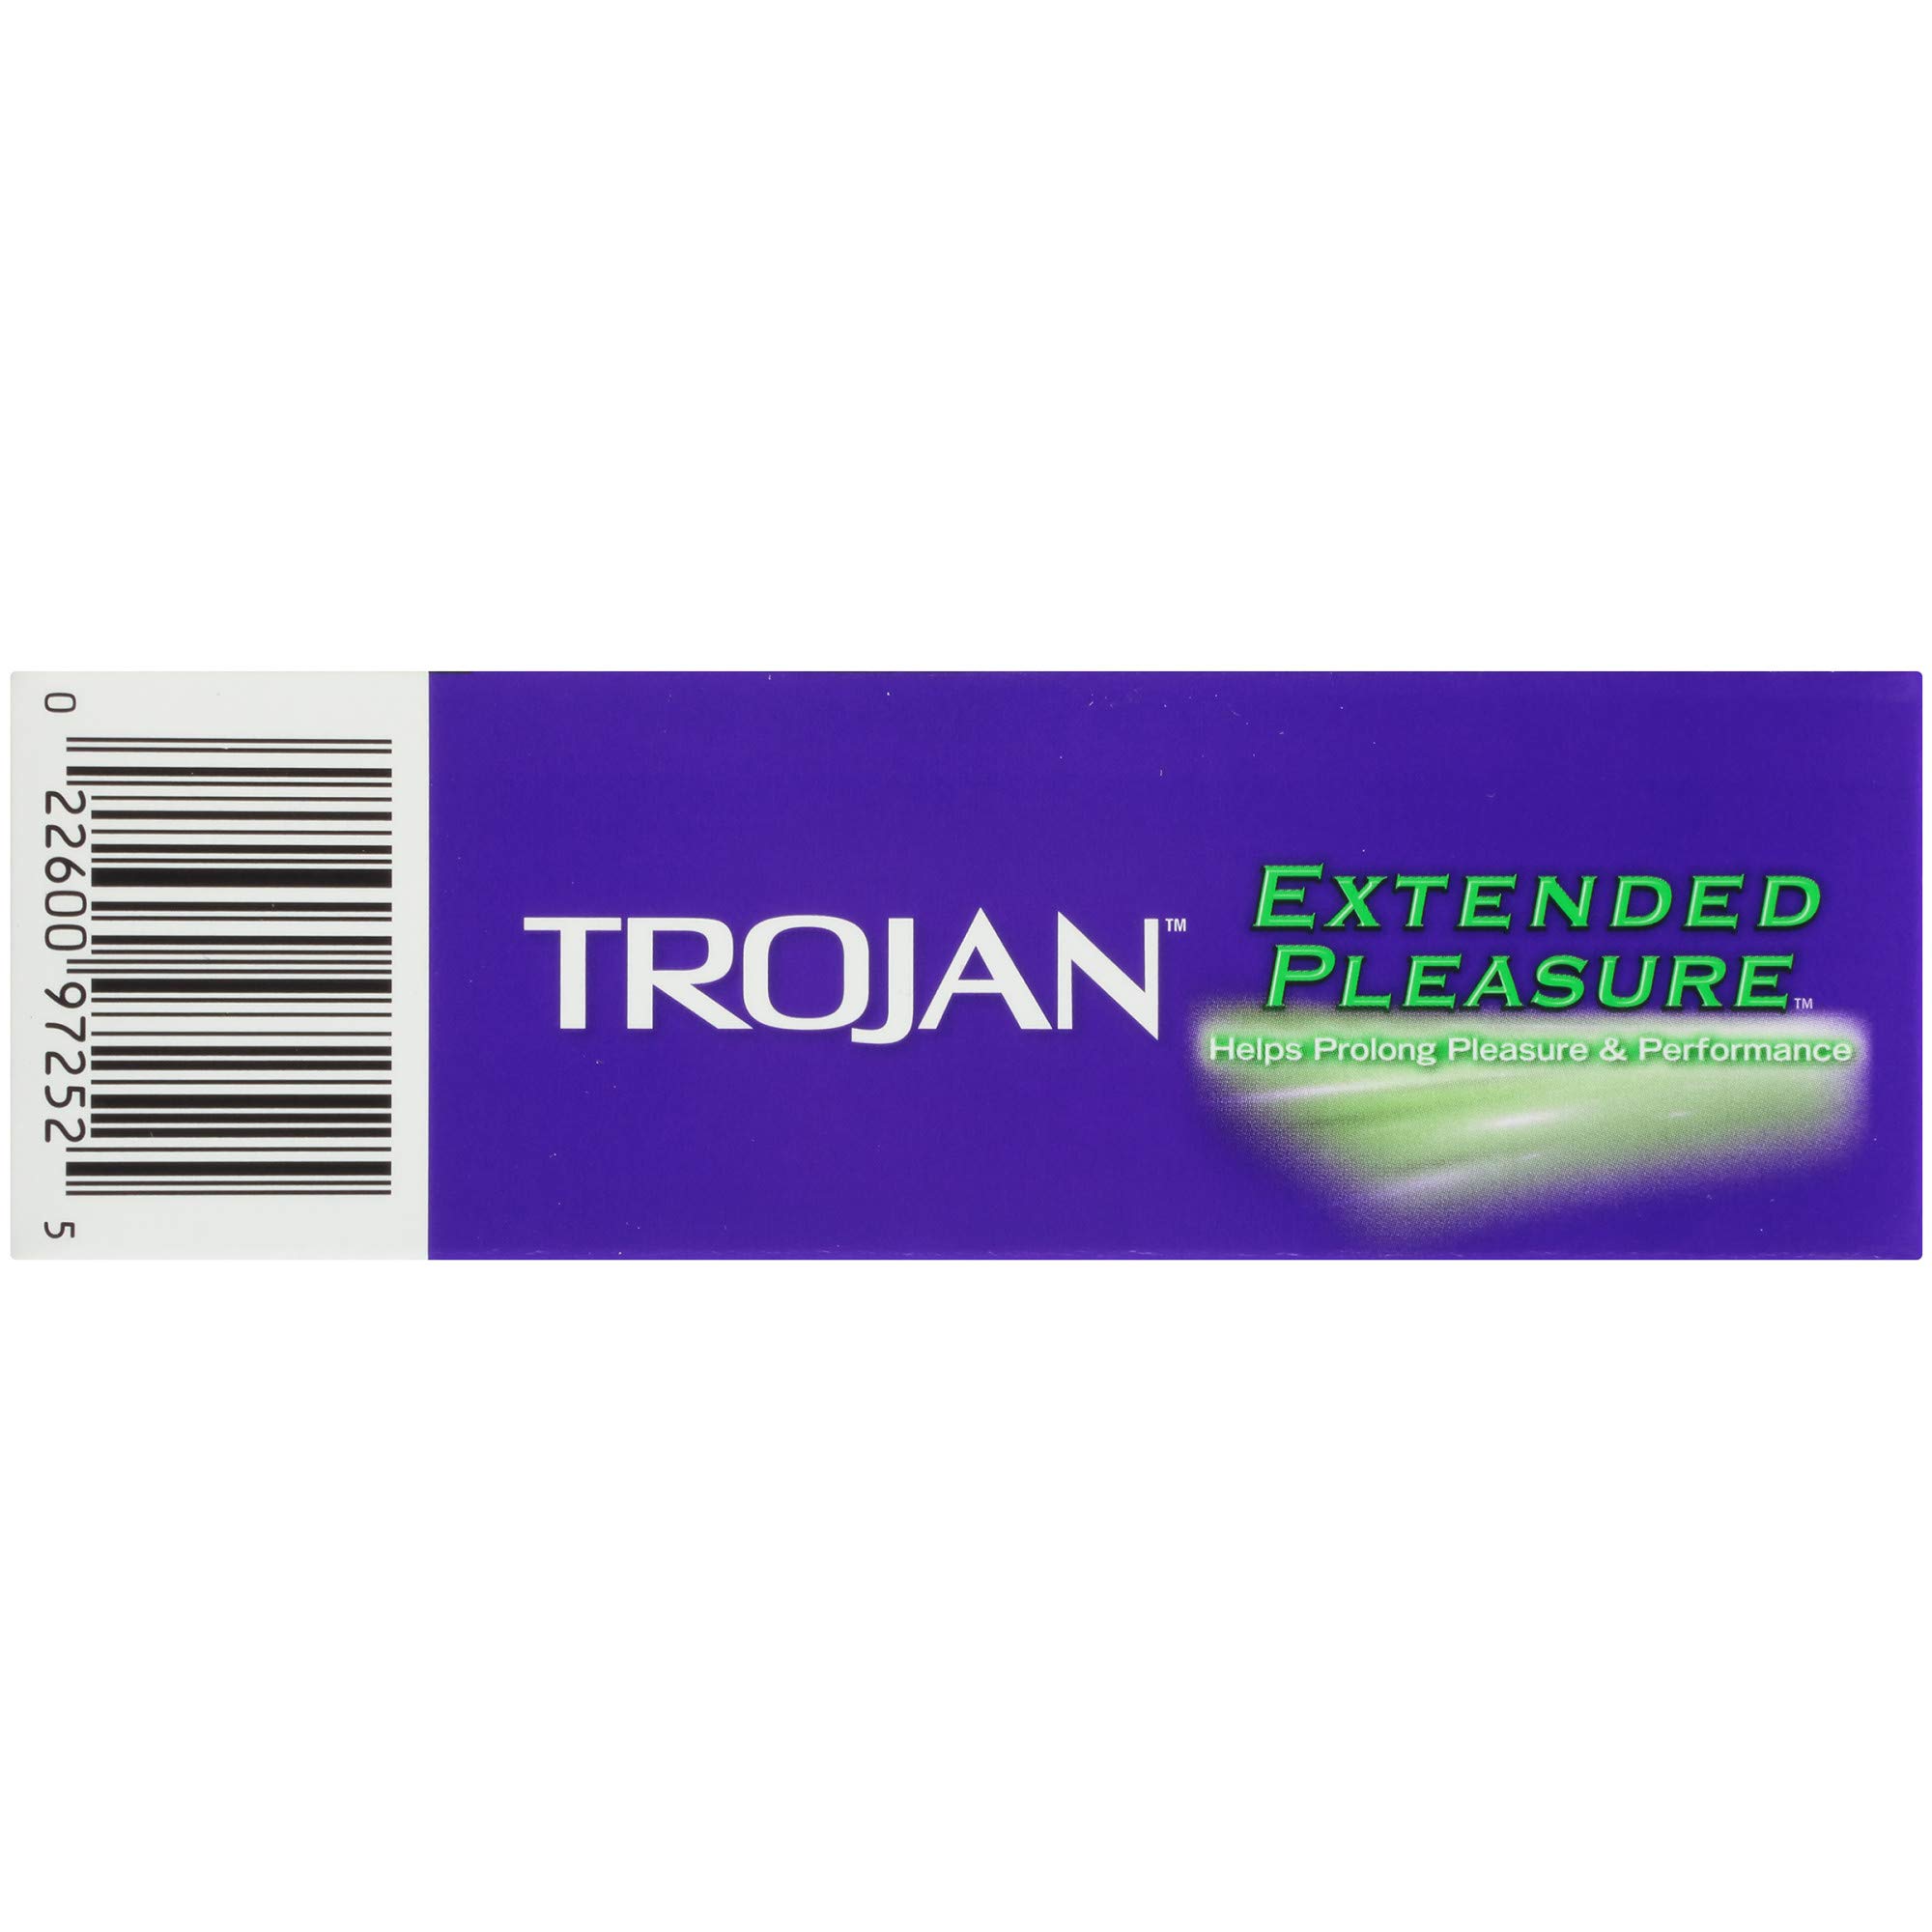 TROJAN EXTENDED PLEASURE Climax Control Extended Pleasure Condoms, 12 Count